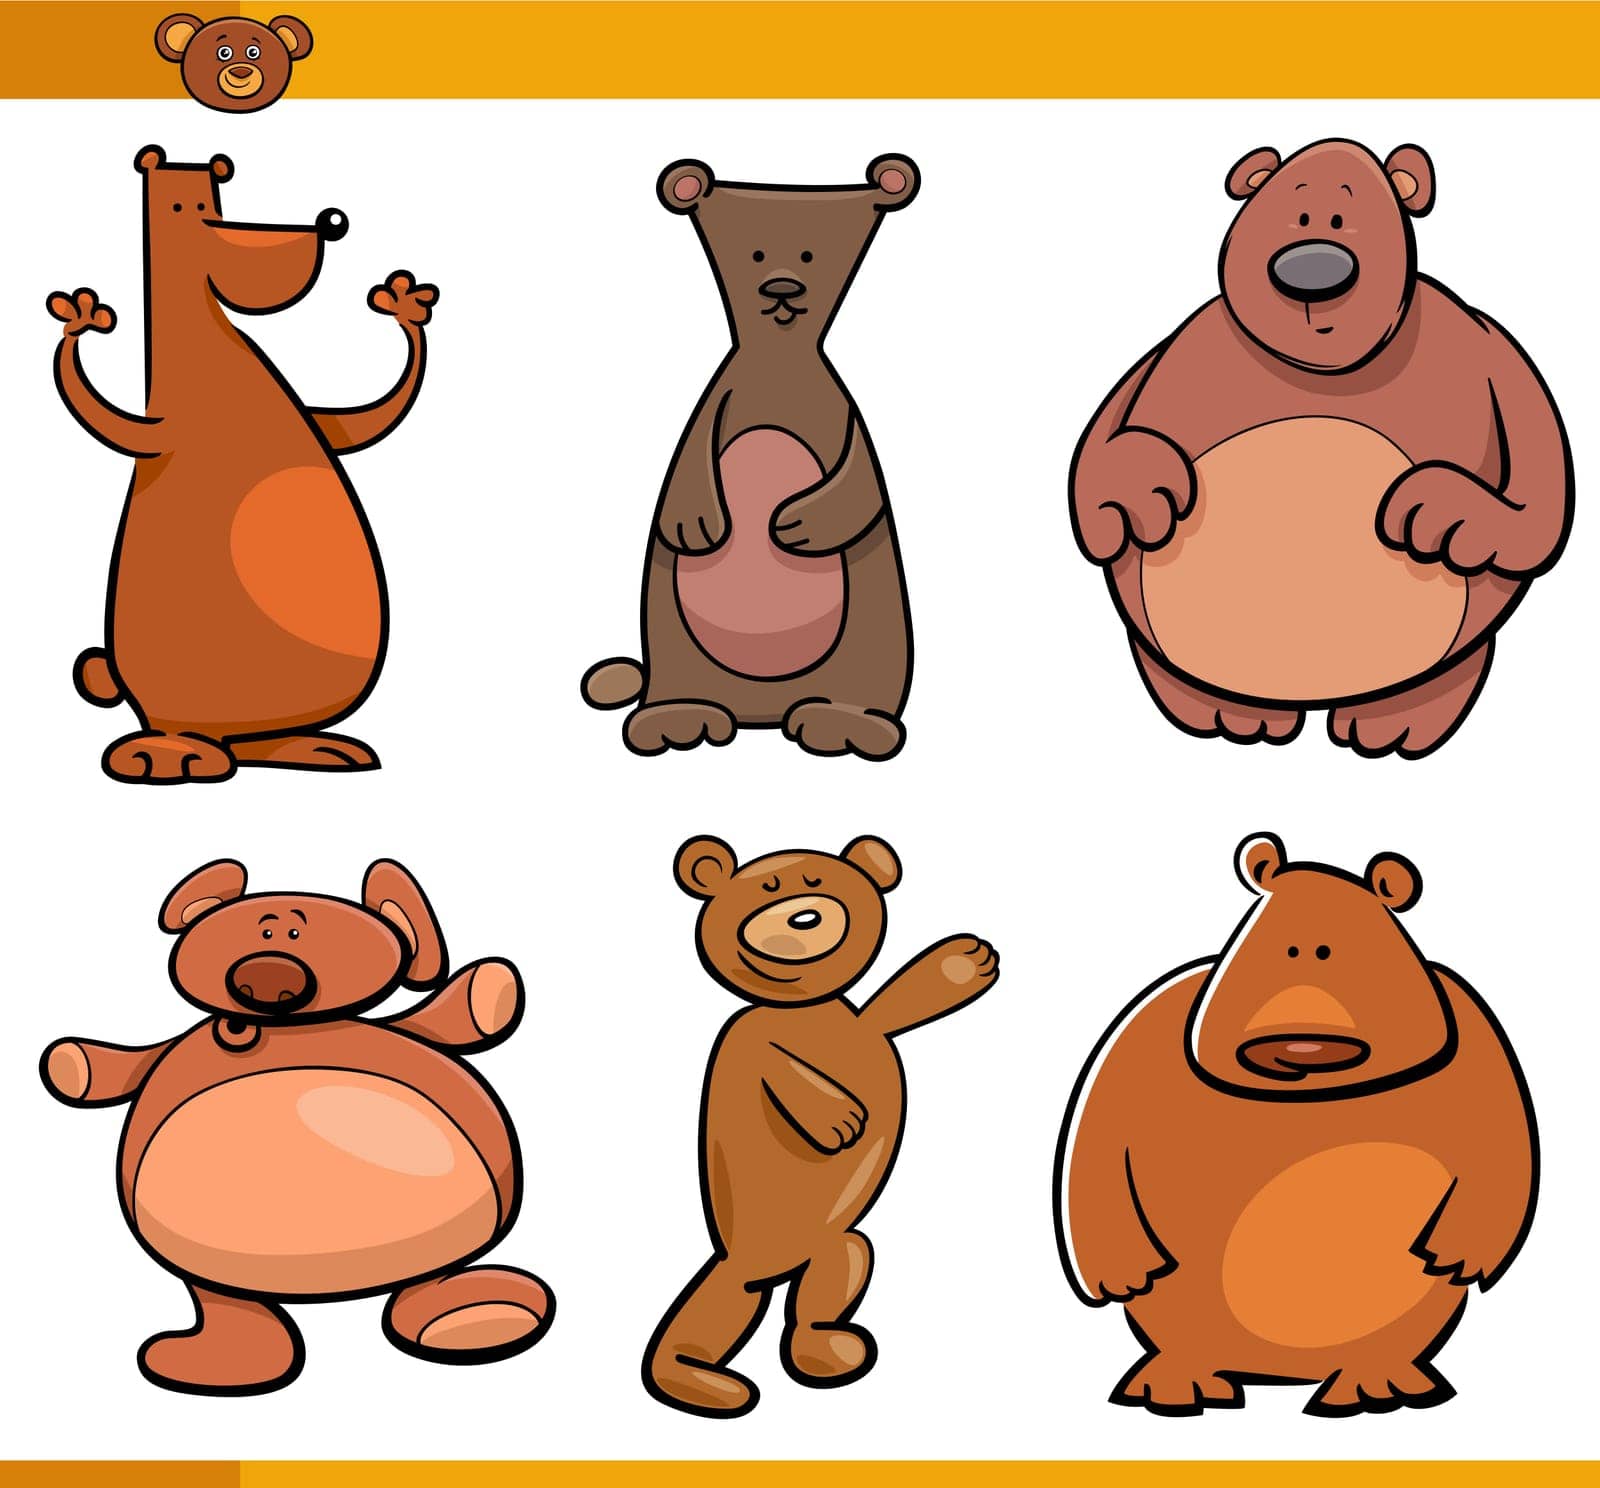 cartoon funny bears animal comic characters set by izakowski